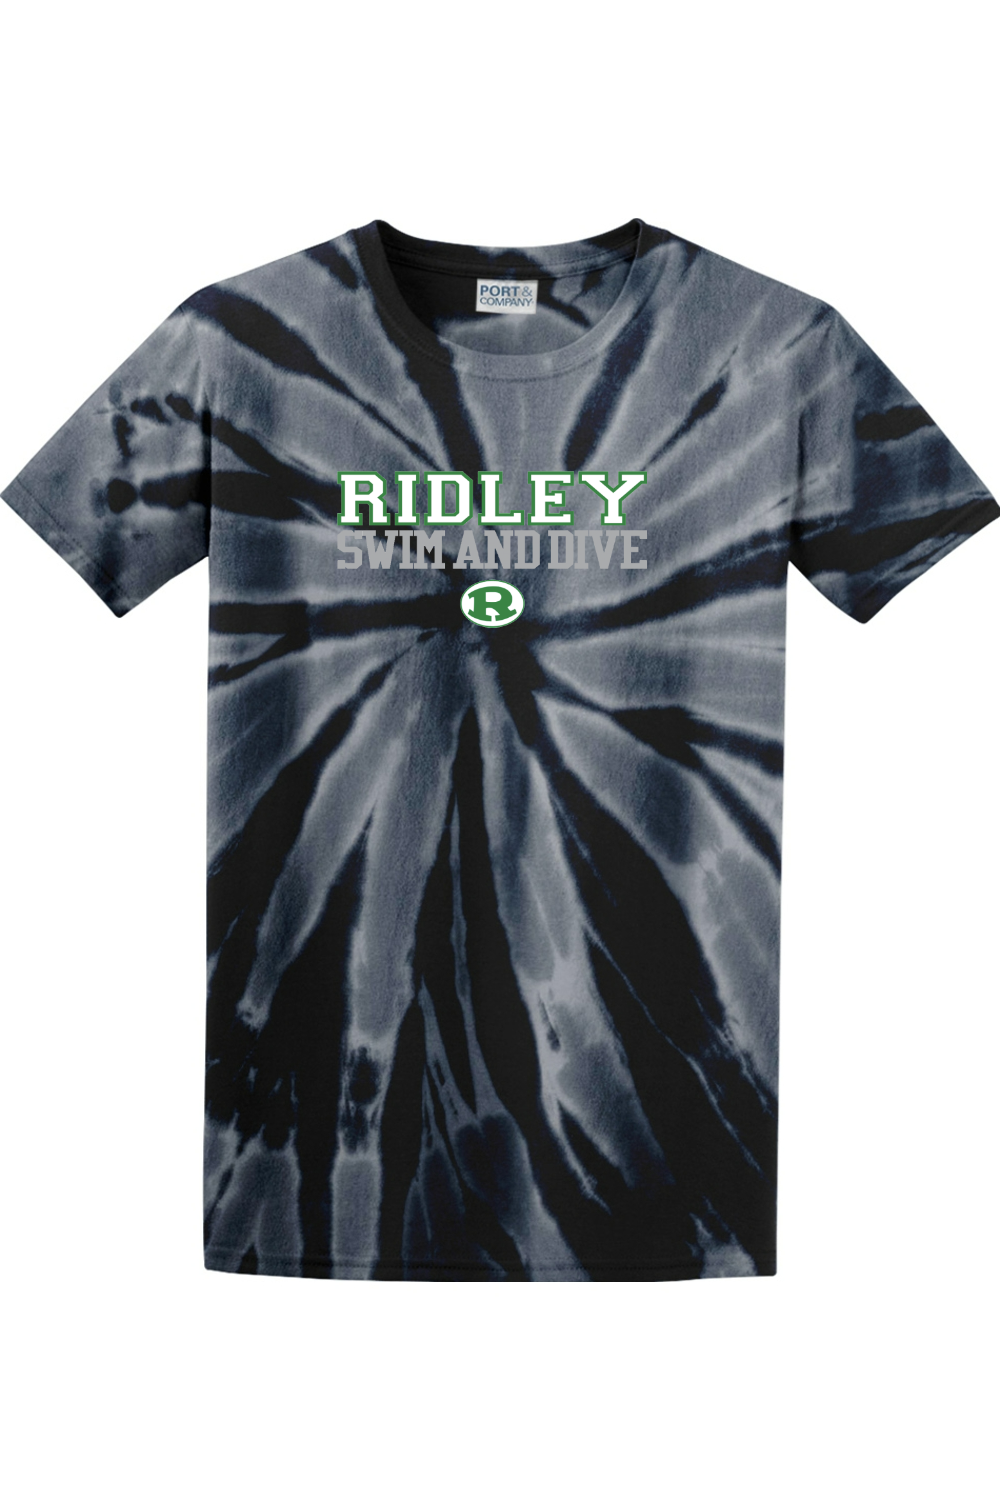 Ridley Swim and Dive Port & Company Tie-Dye Tee